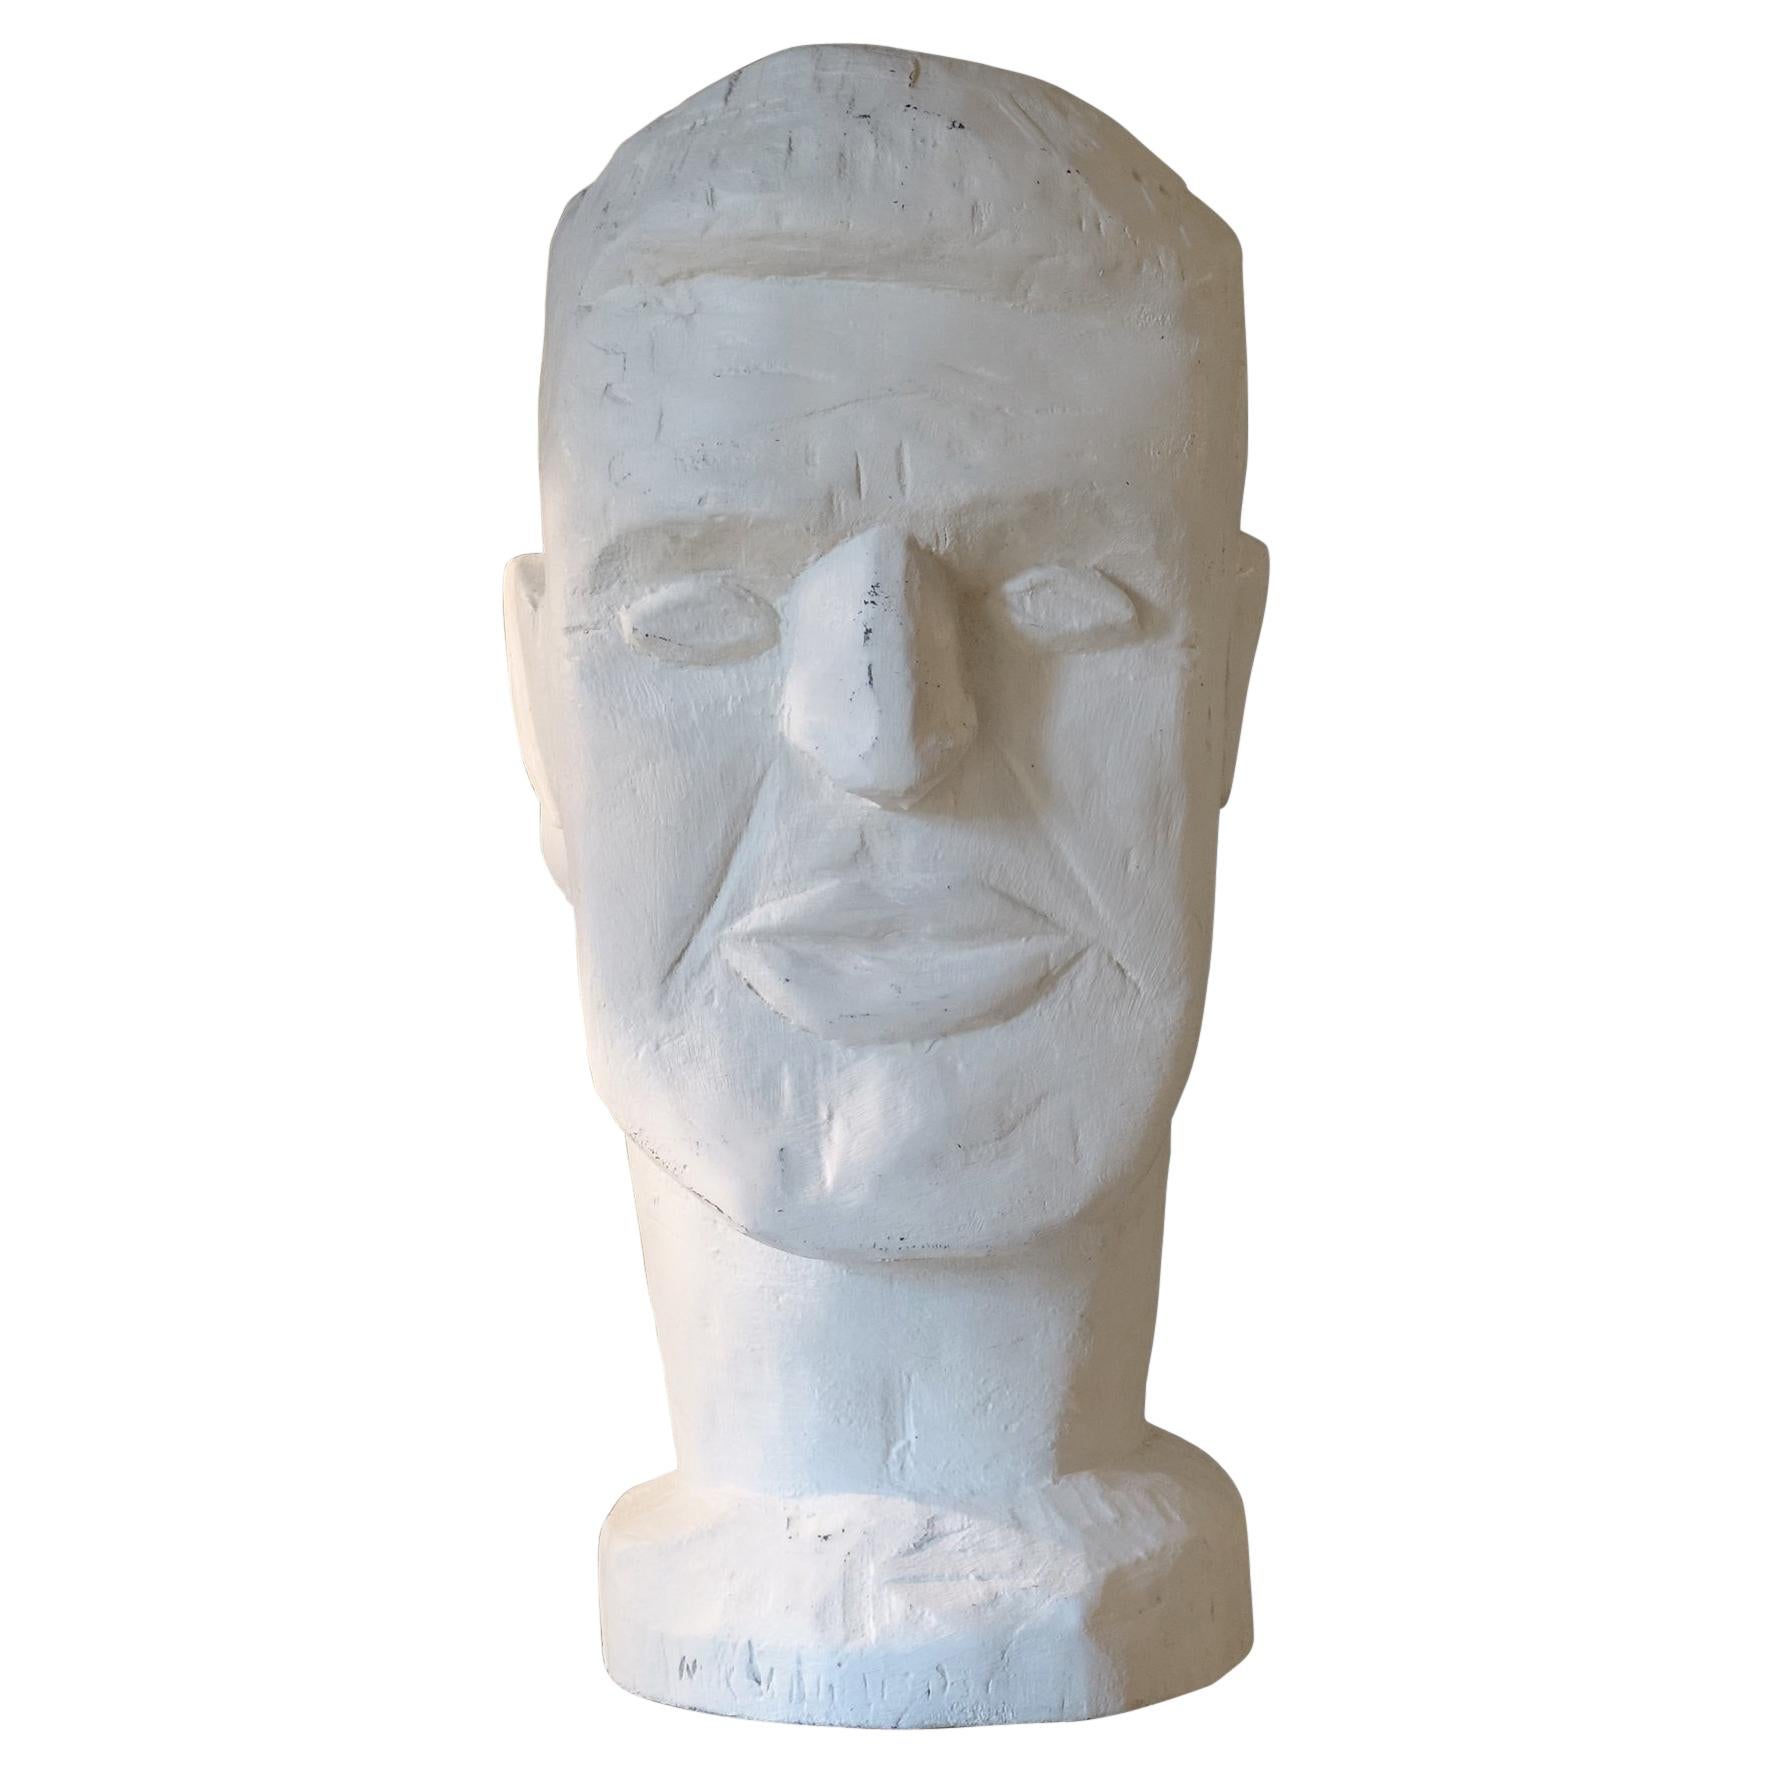 1990's Male Head Sculpture, White Wood, Mirsad Bijedic